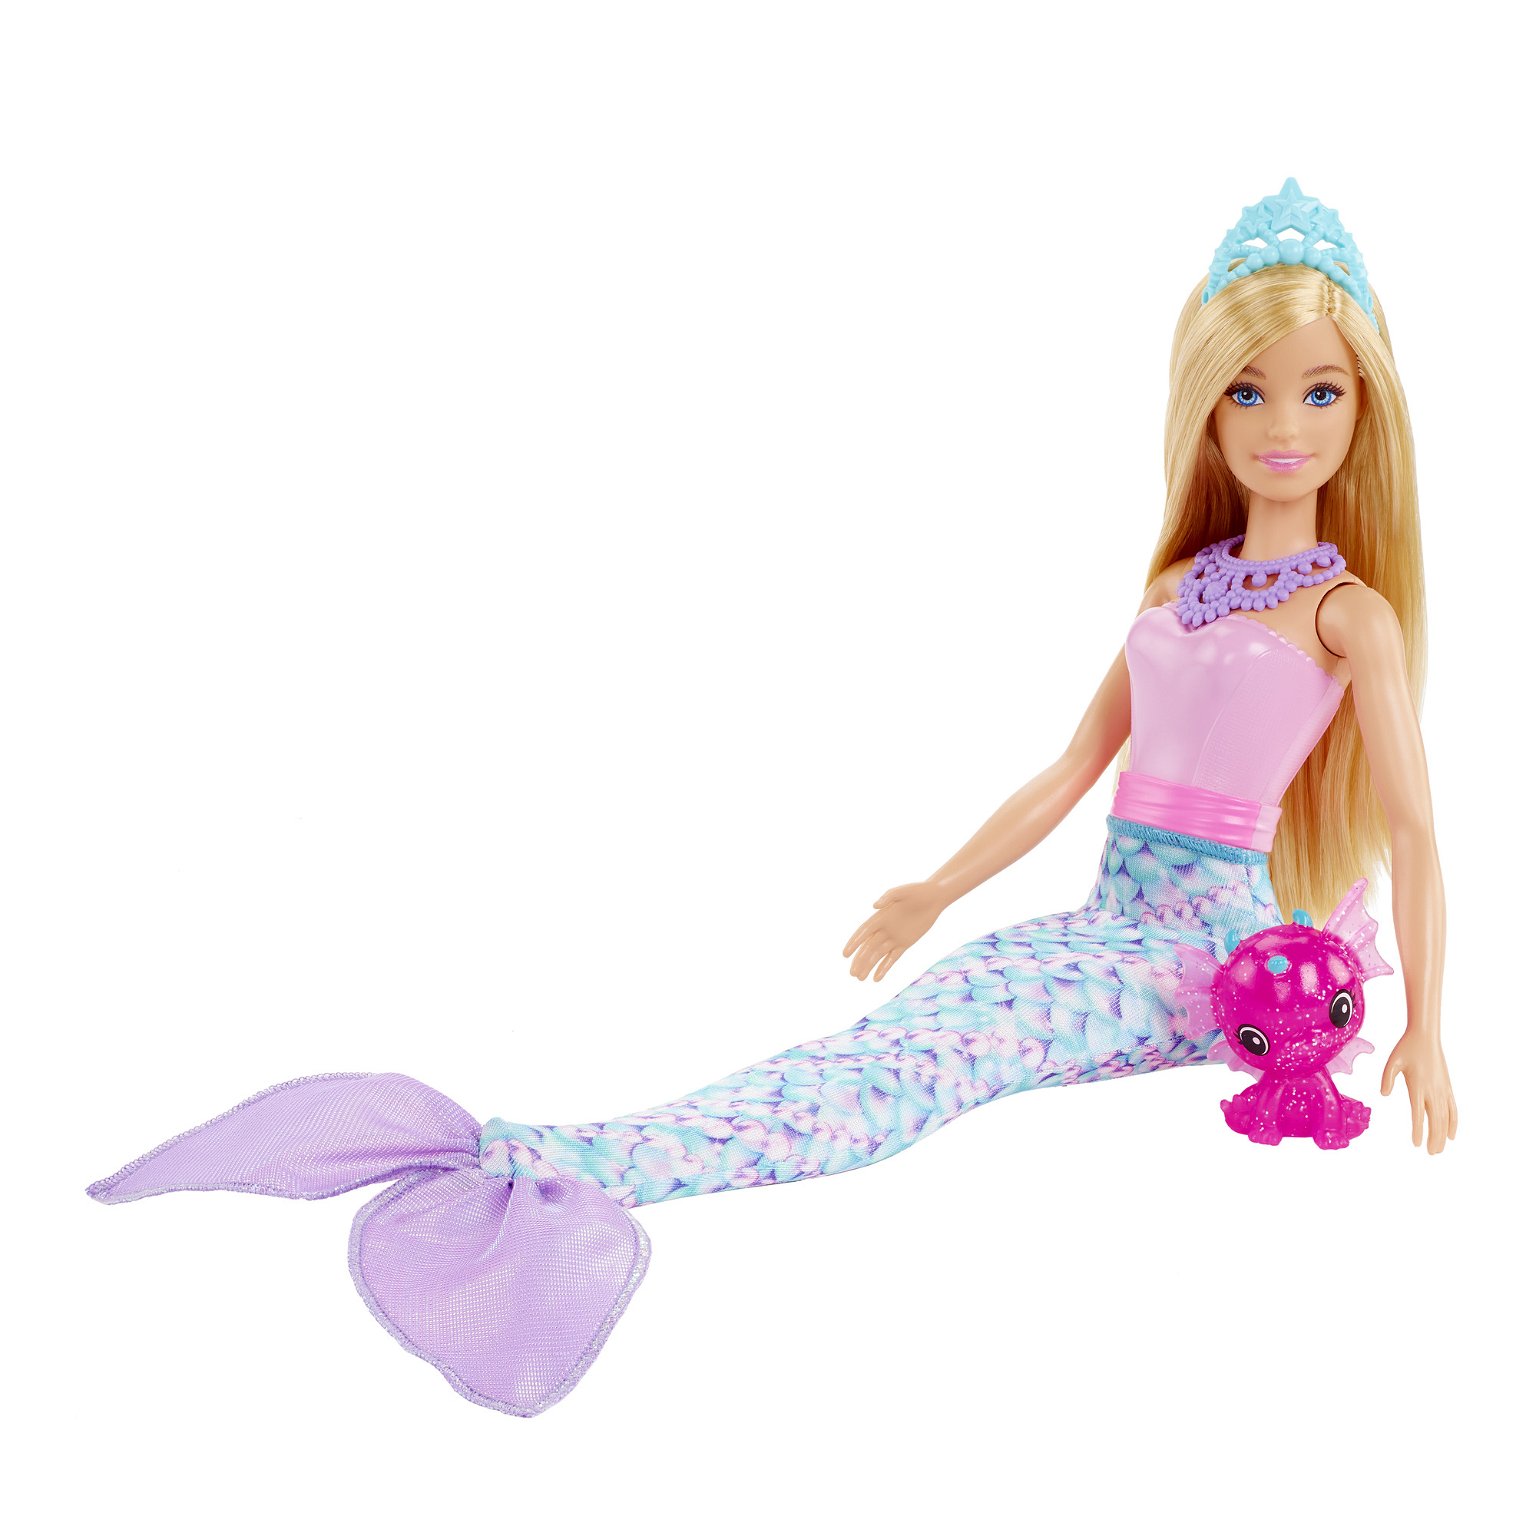 Barbie Dreamtopia advento kalendorius - 5